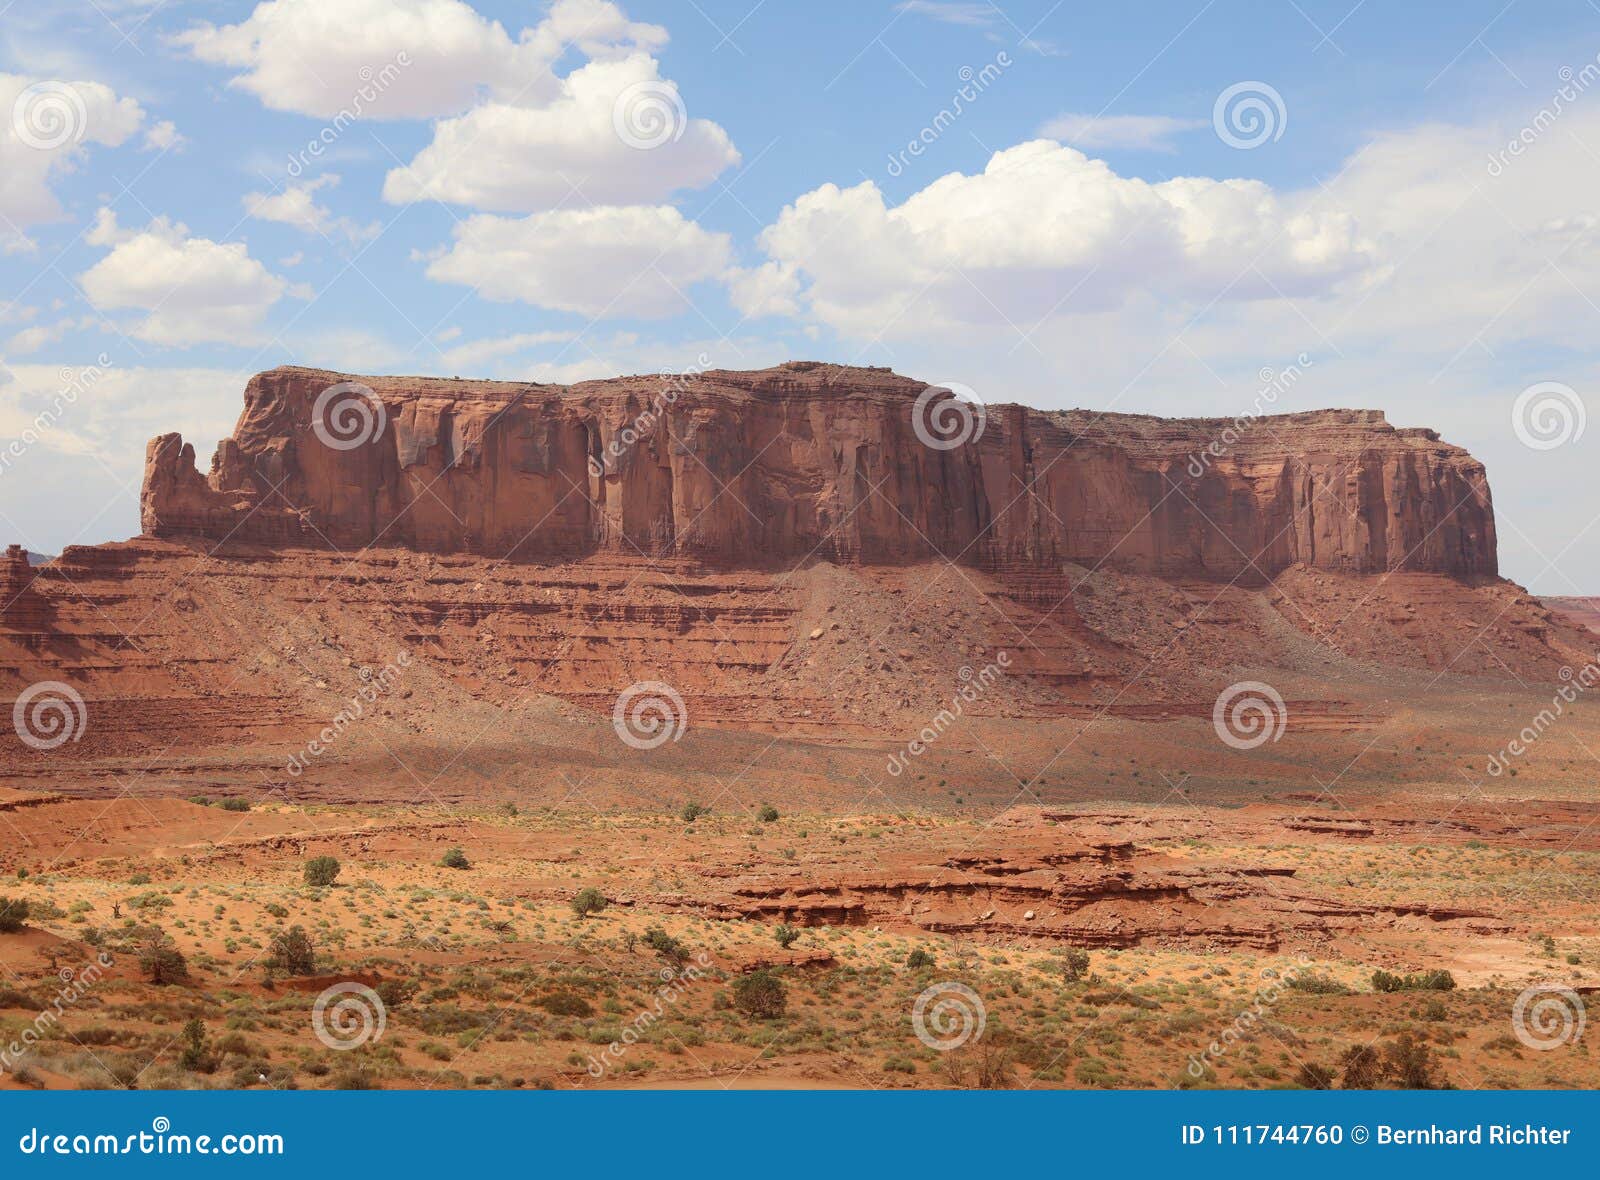 sentinel mesa in monument valley. arizona